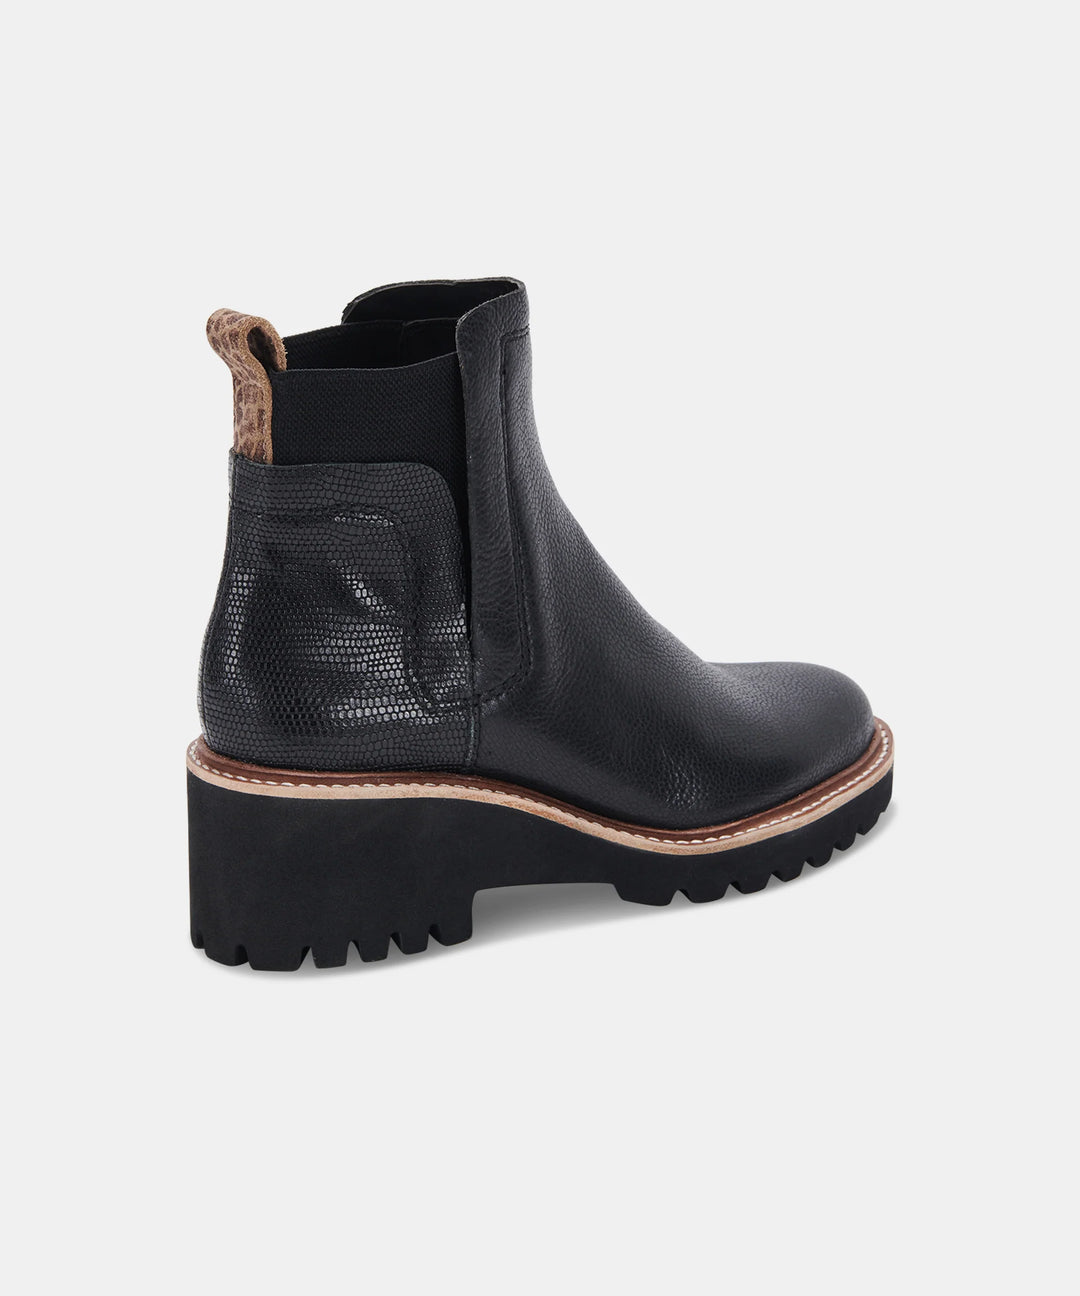 Dolce Vita Huey H2O Waterproof Boots- Black Leather